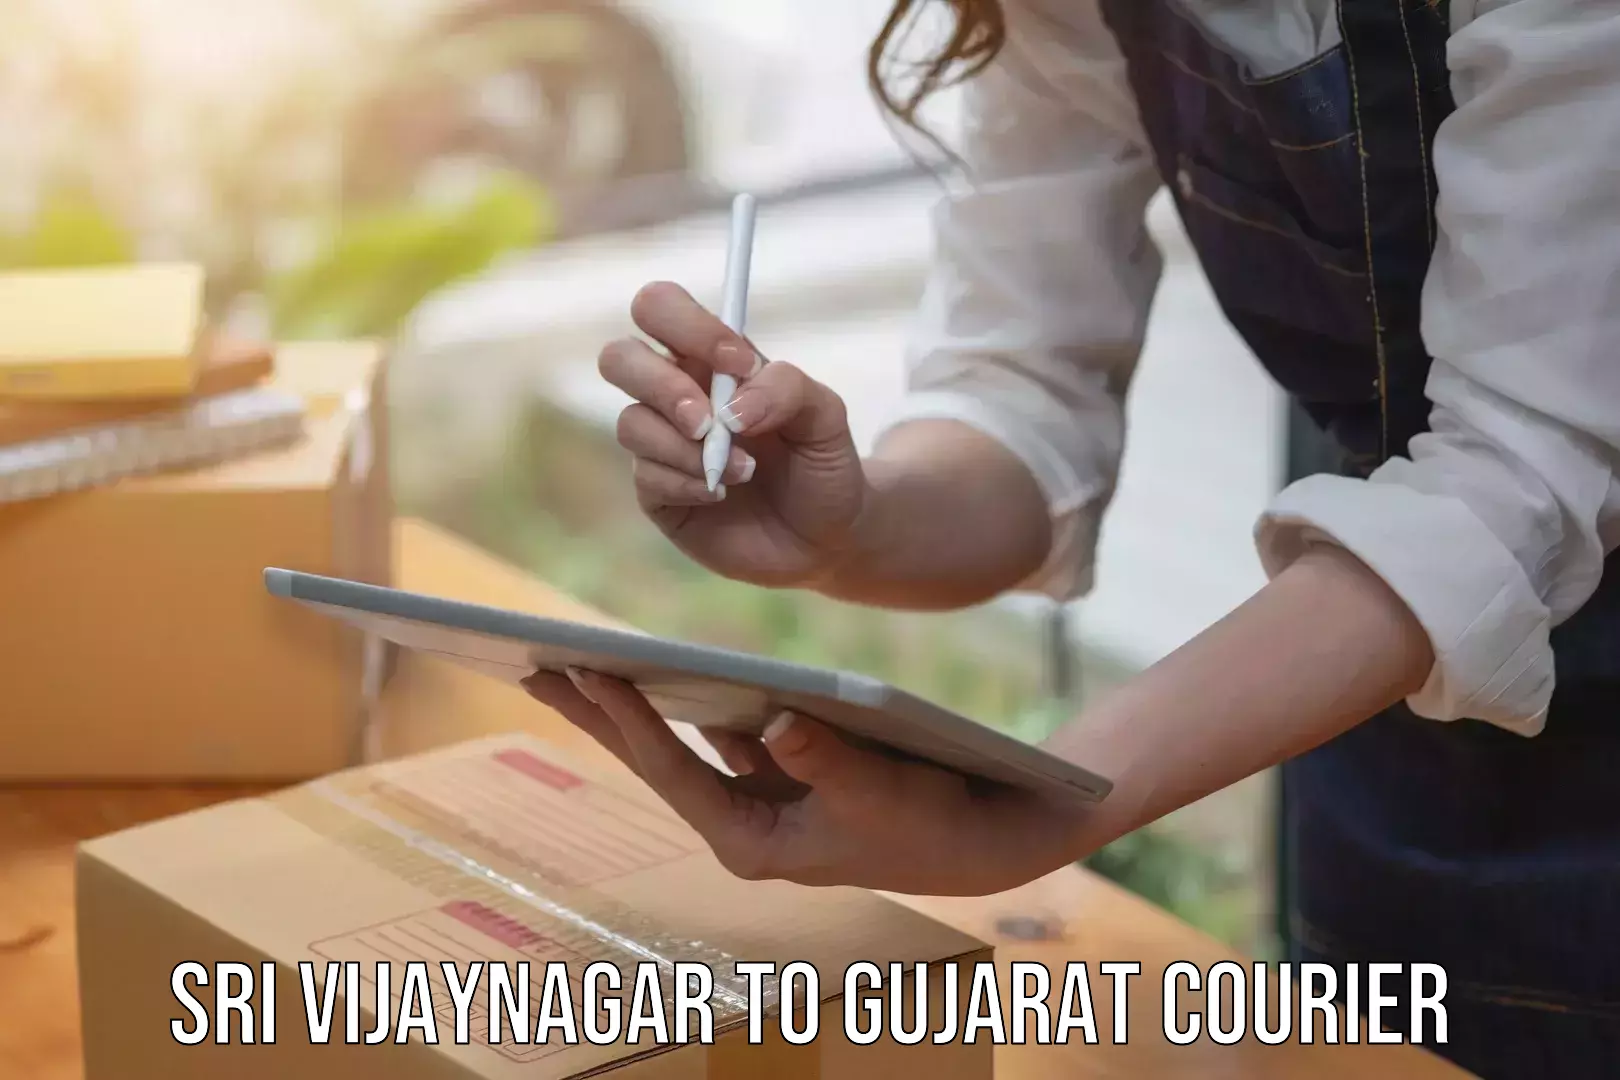 Nationwide delivery network Sri Vijaynagar to Gujarat